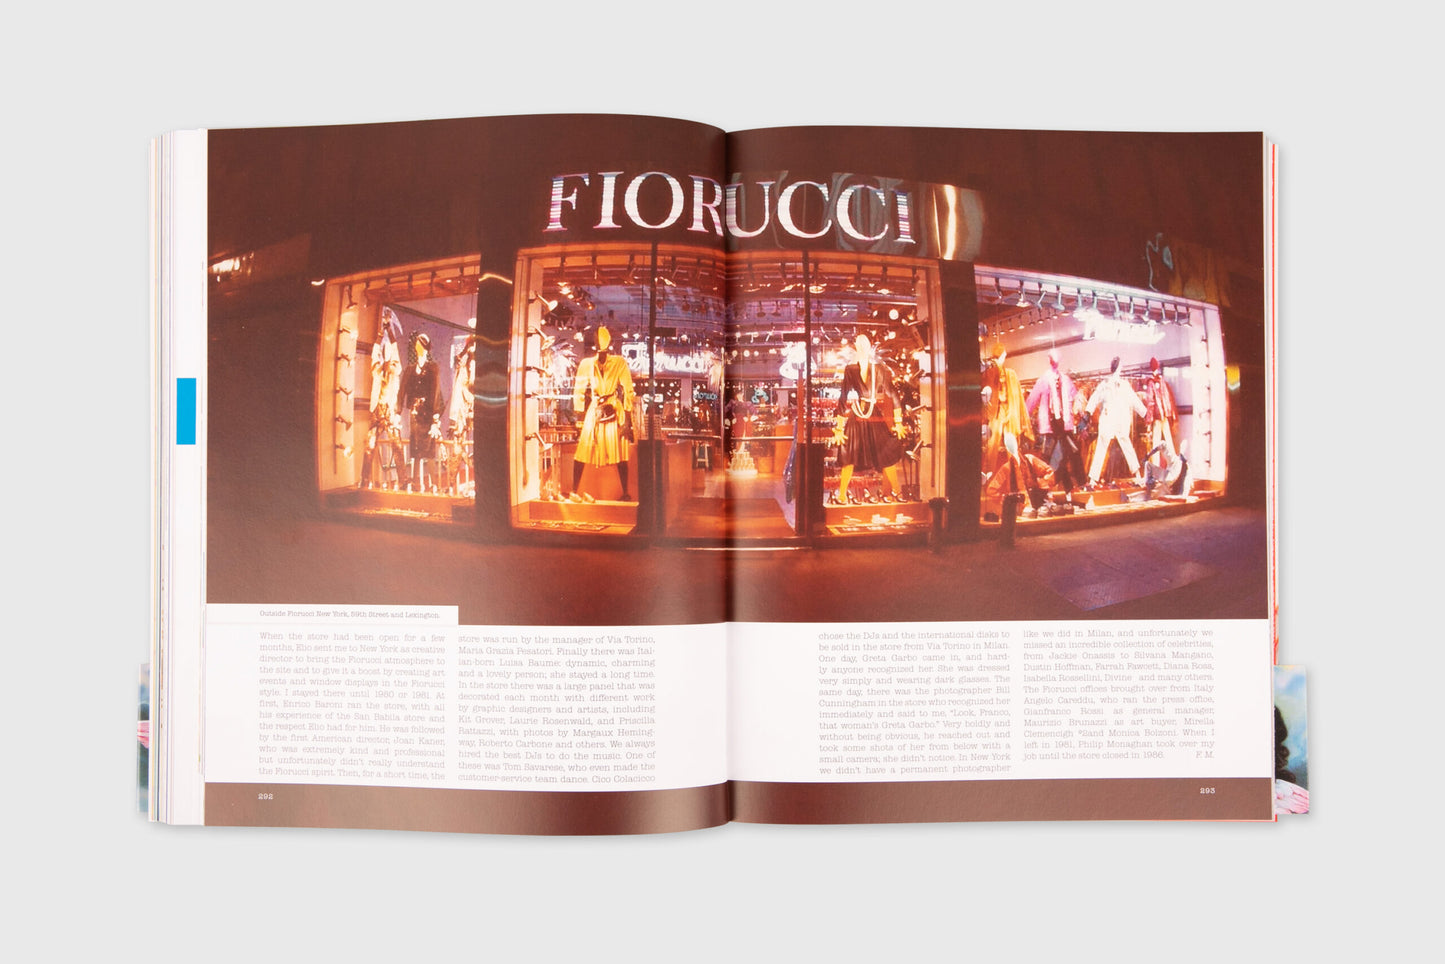 Dear Elio: A Marvelous Journey into the World of Fiorucci